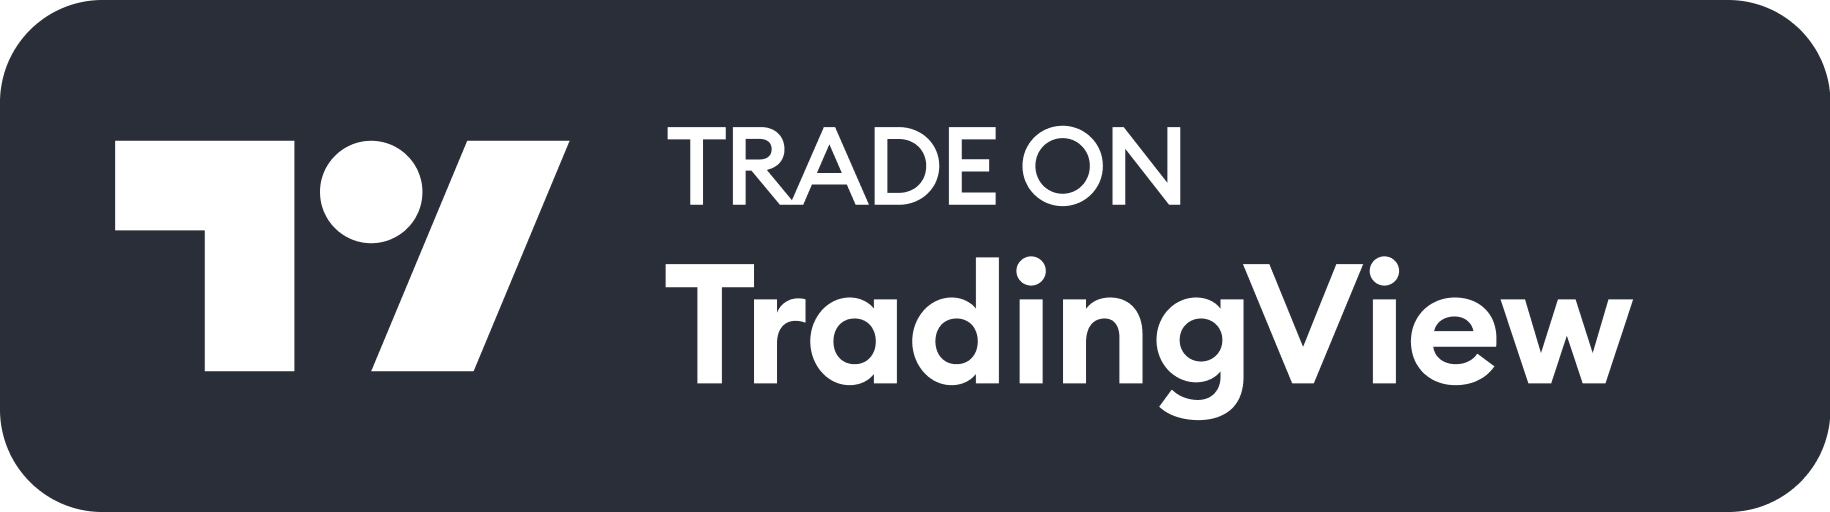 Trade On TradingView Button Dark